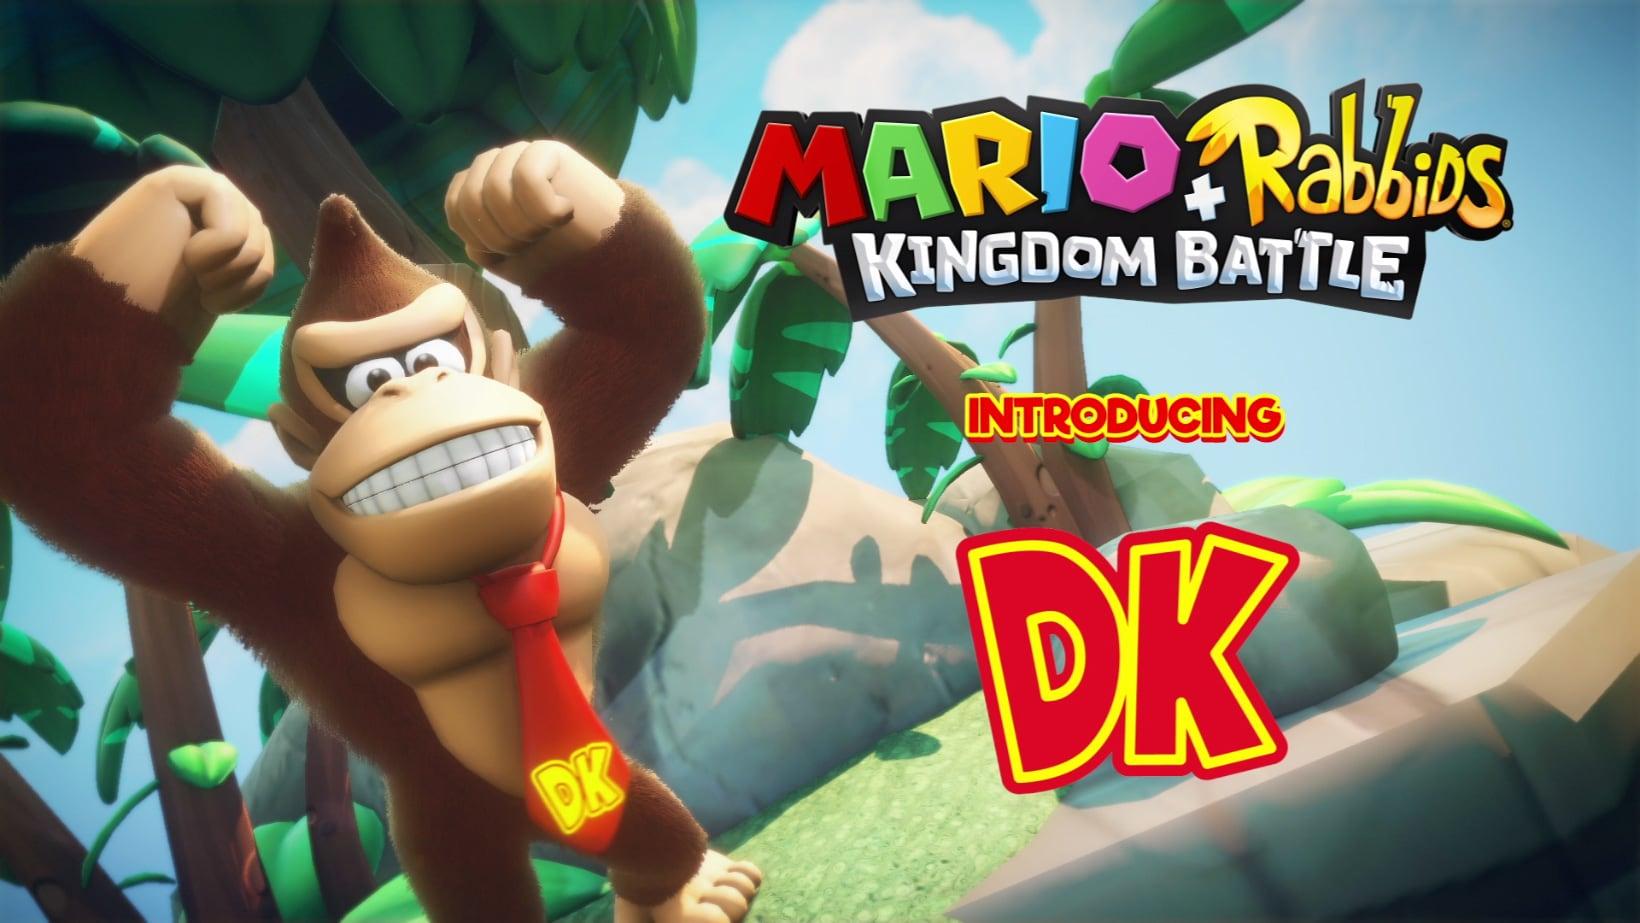 Donkey Kong Smashes His Way into Mario + Rabbids Kingdom Battle DLC